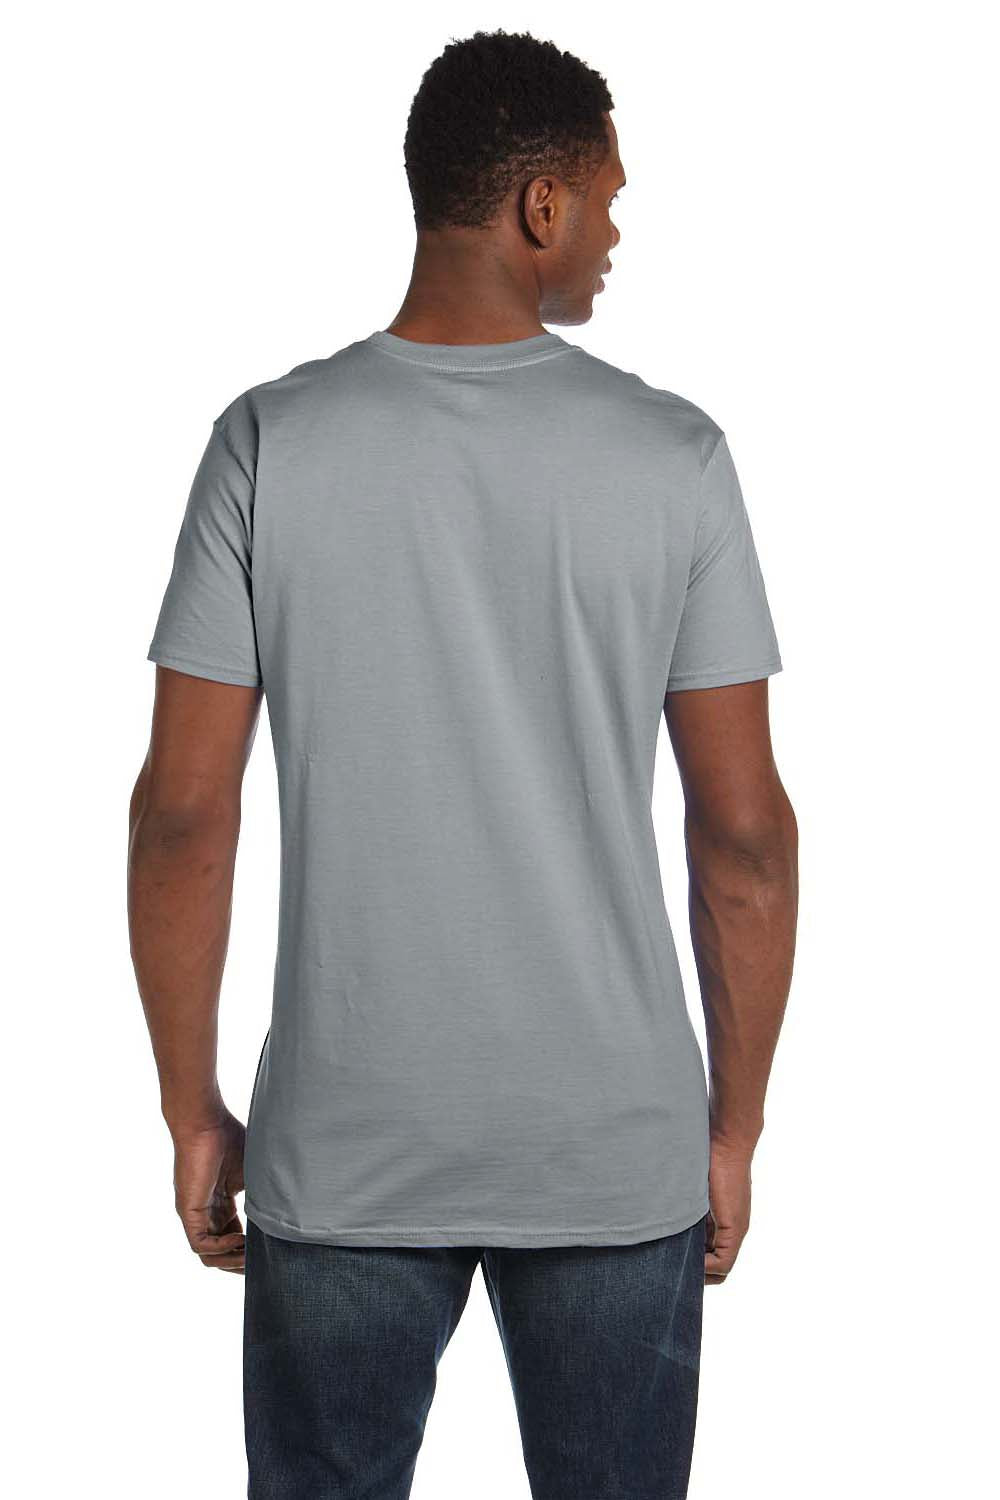 Hanes 4980 Mens Nano-T Short Sleeve Crewneck T-Shirt Vintage Grey Back